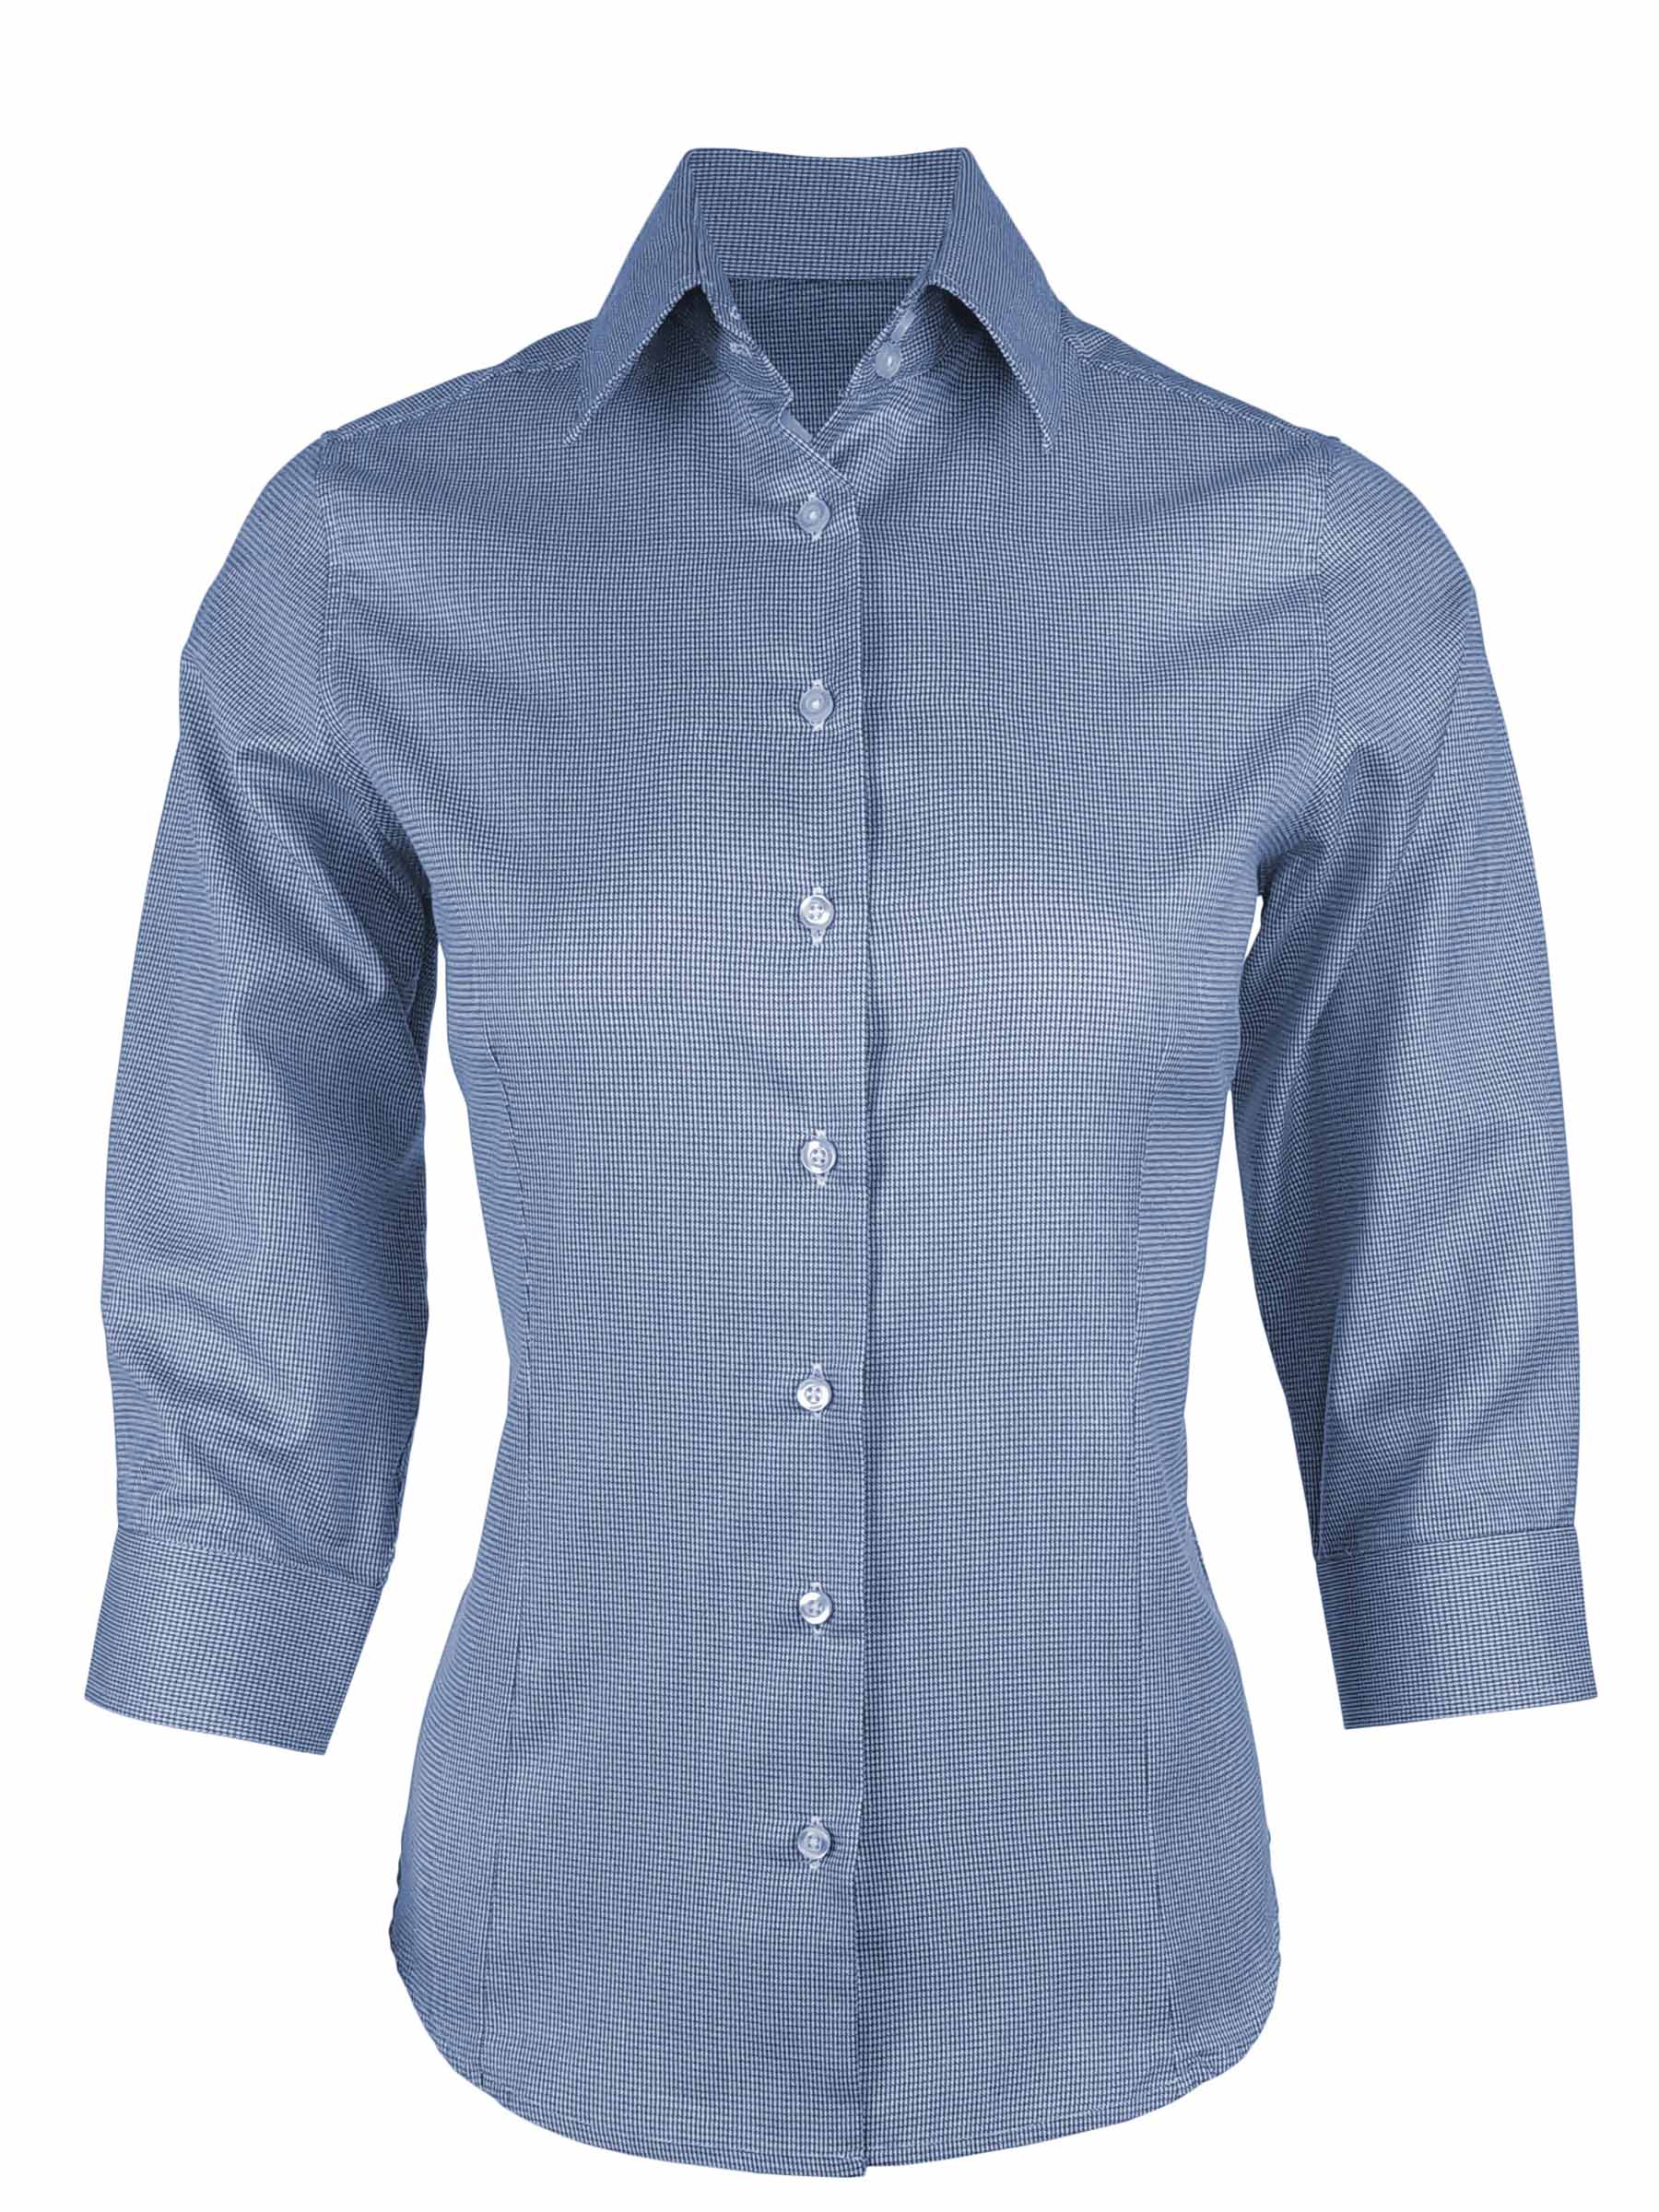 Women's Wilson Shirt - Navy Houndstooth Three Quarter - Uniform Edit